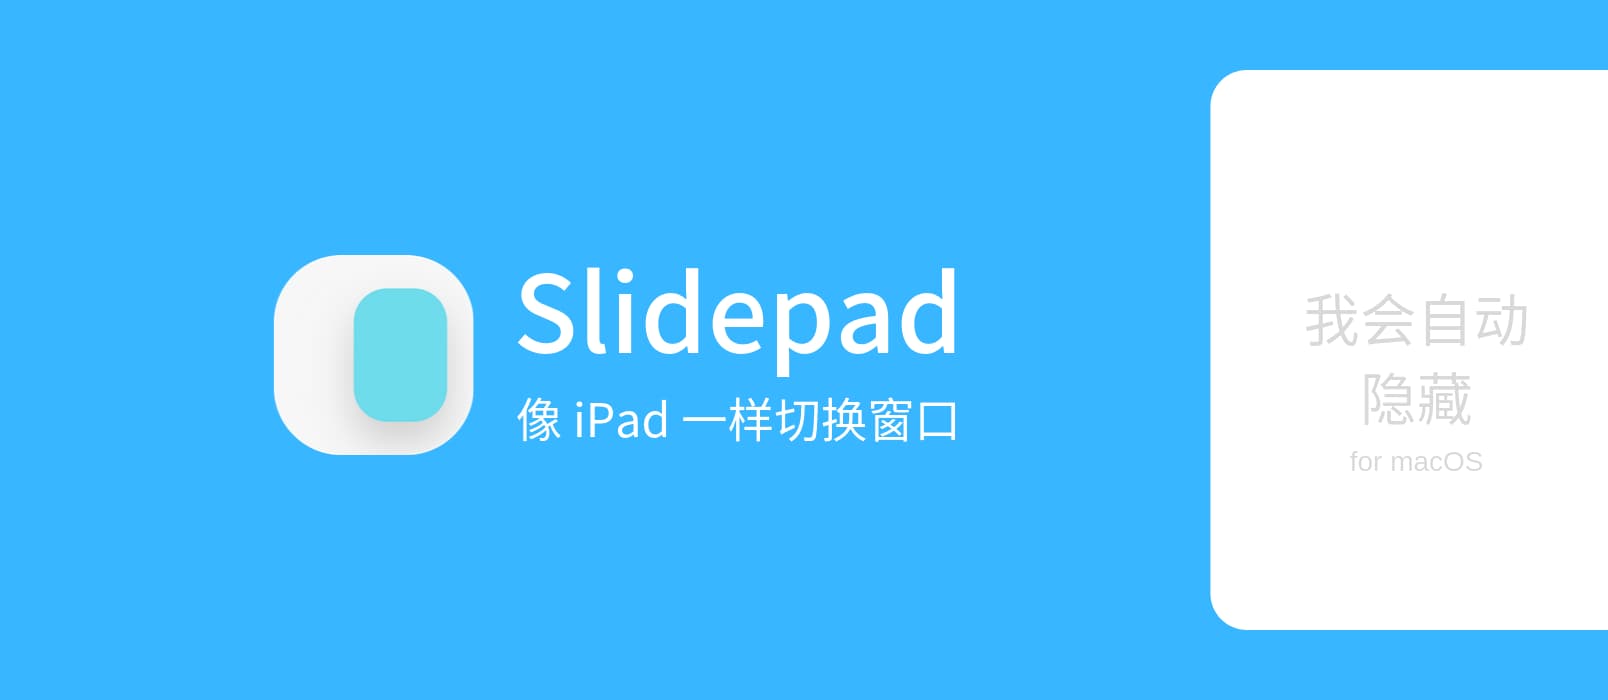 SlidePad - 能吸附在屏幕右侧，自动隐藏的迷你浏览器，像 iPad 一样切换窗口[macOS] 1